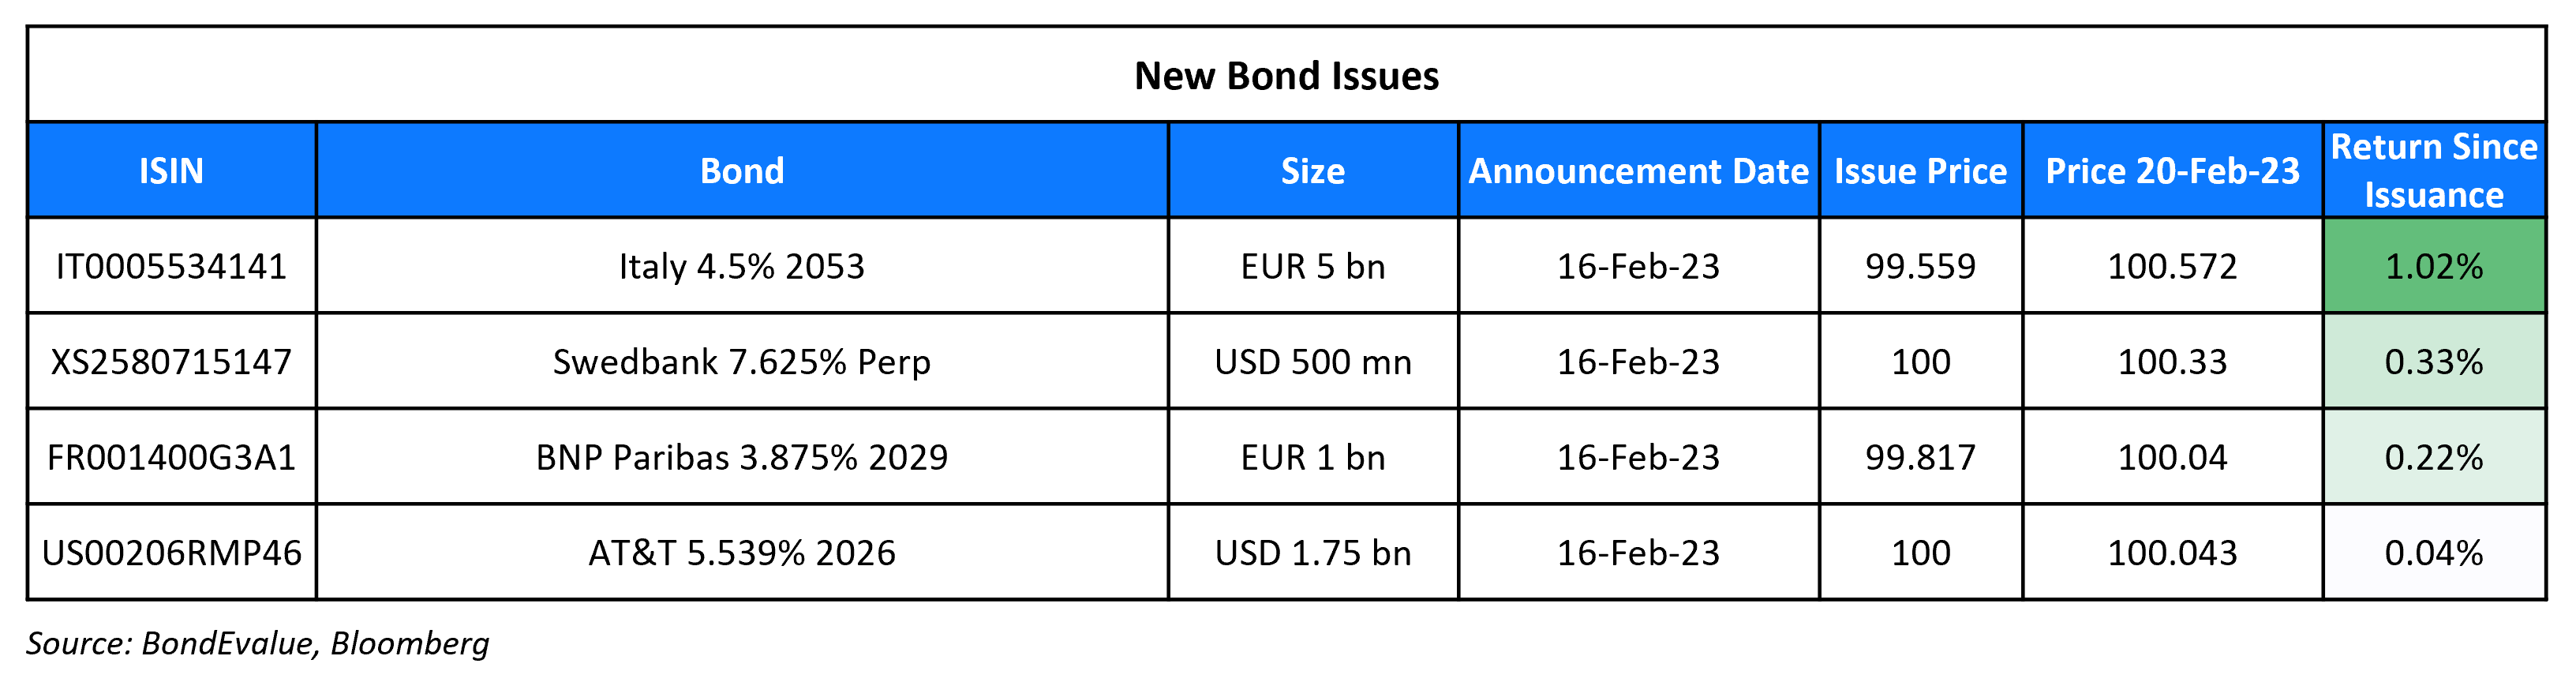 New Bond Issues 20 Feb 23